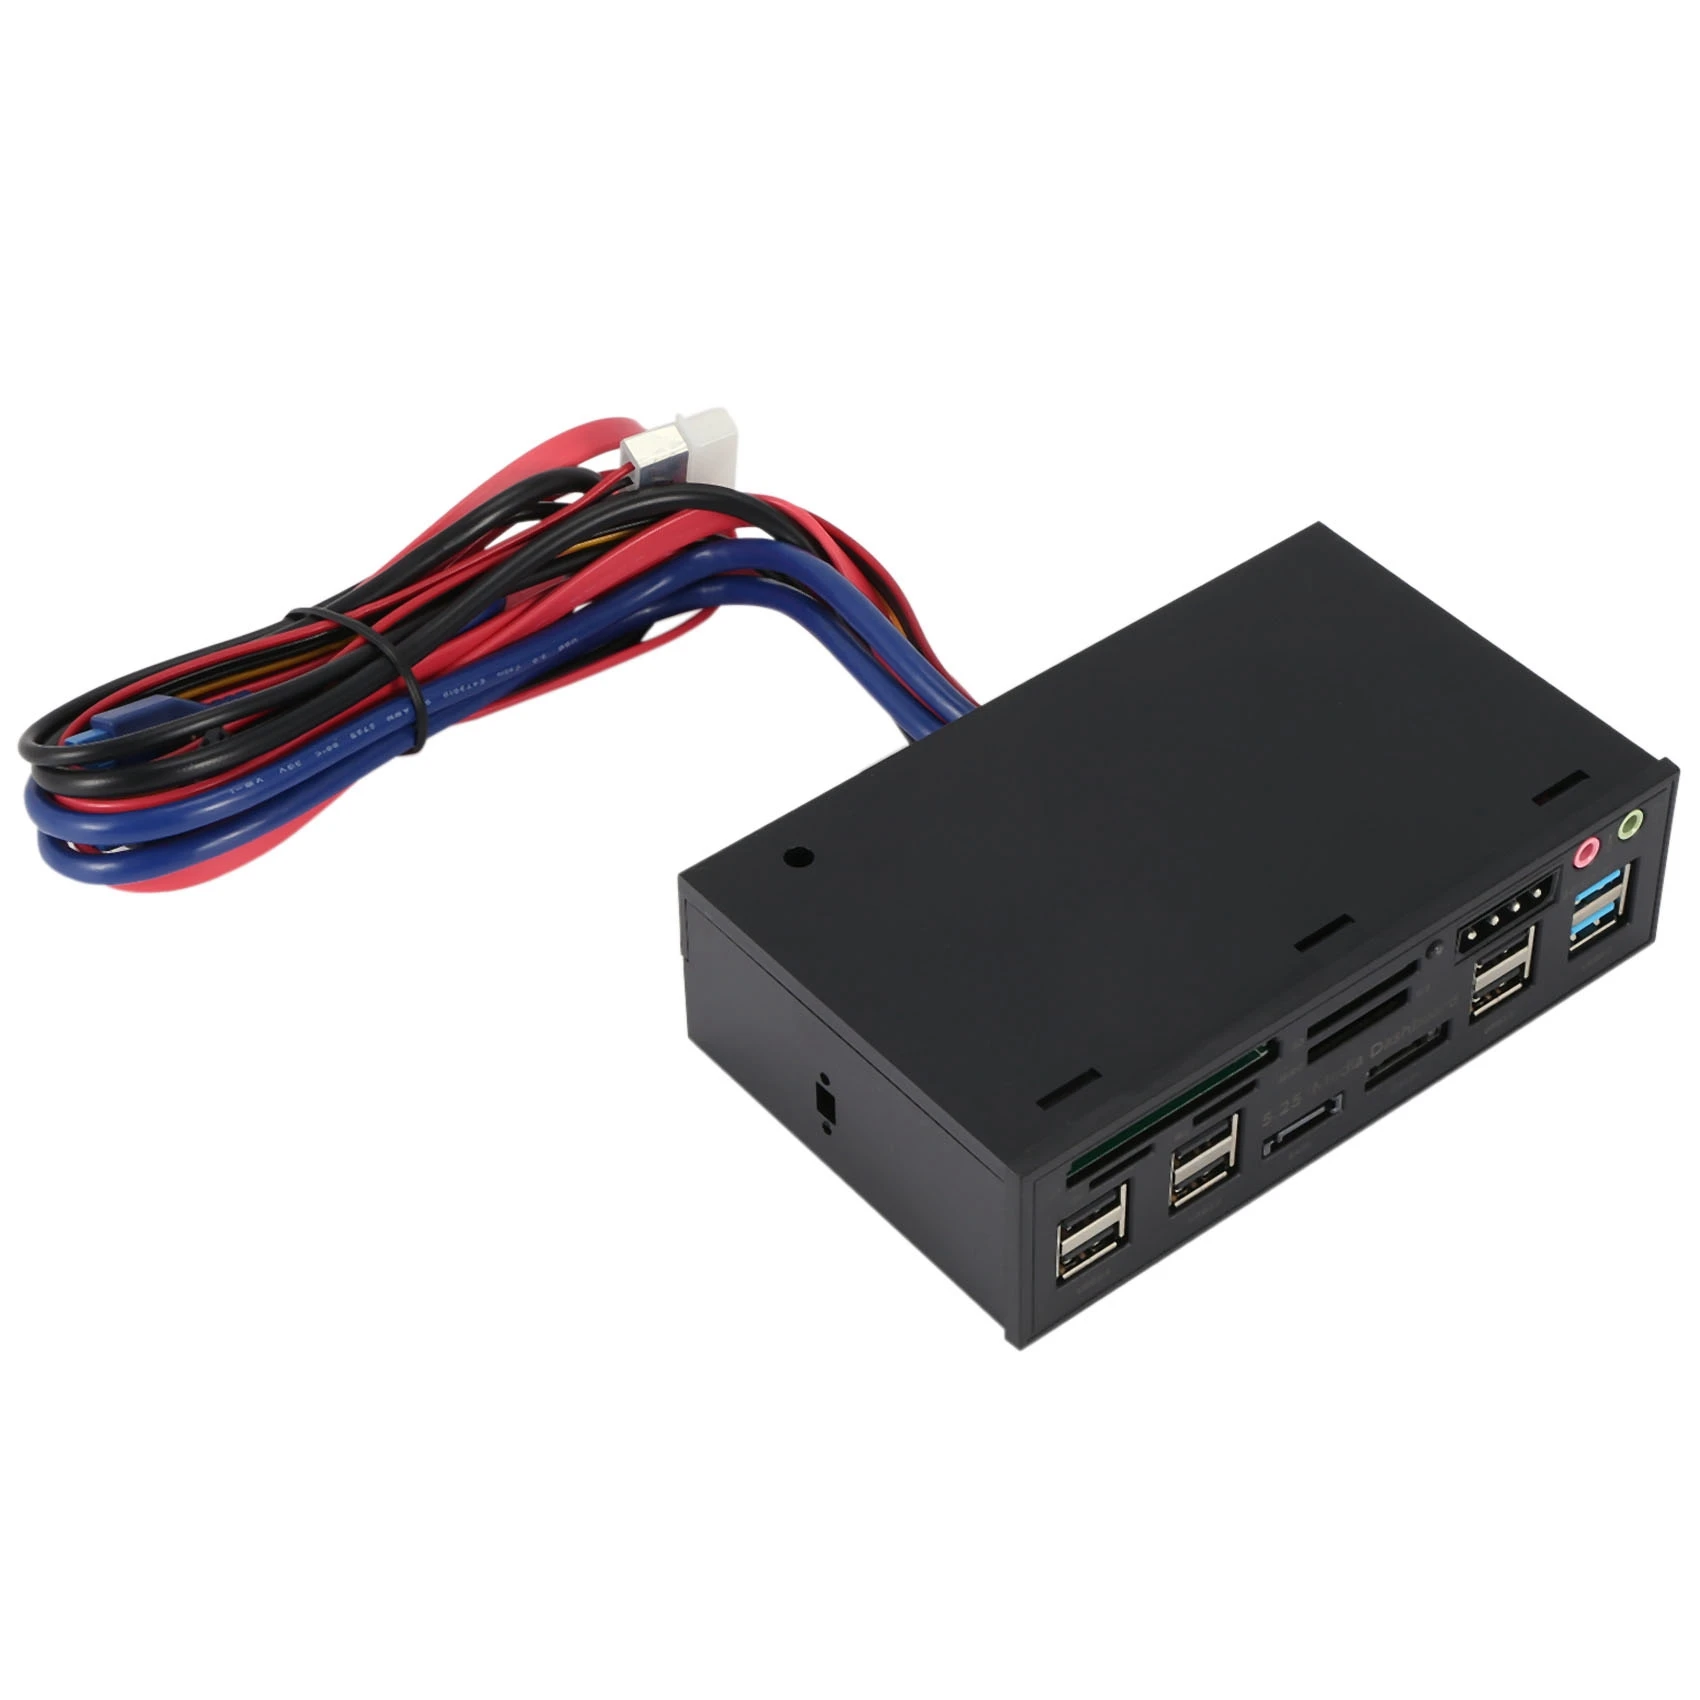 

Multifuntion 5.25" Media Dashboard Card Reader USB 2.0 USB 3.0 20 pin e-SATA SATA Front Panel